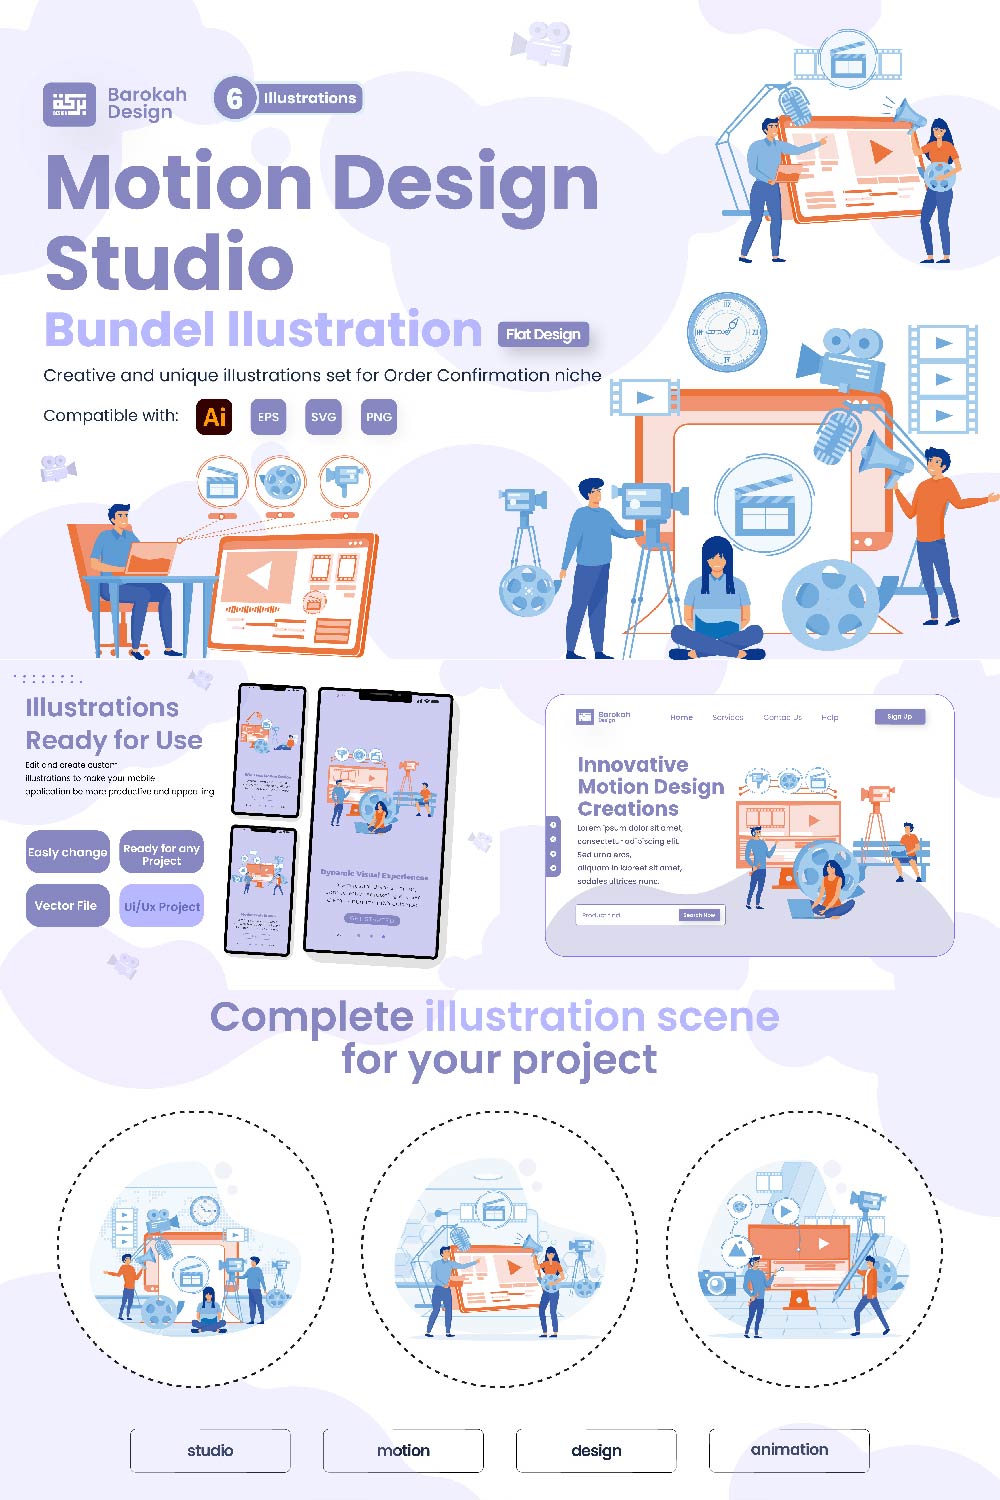 Illustration of Motion Design Studio Concept pinterest preview image.